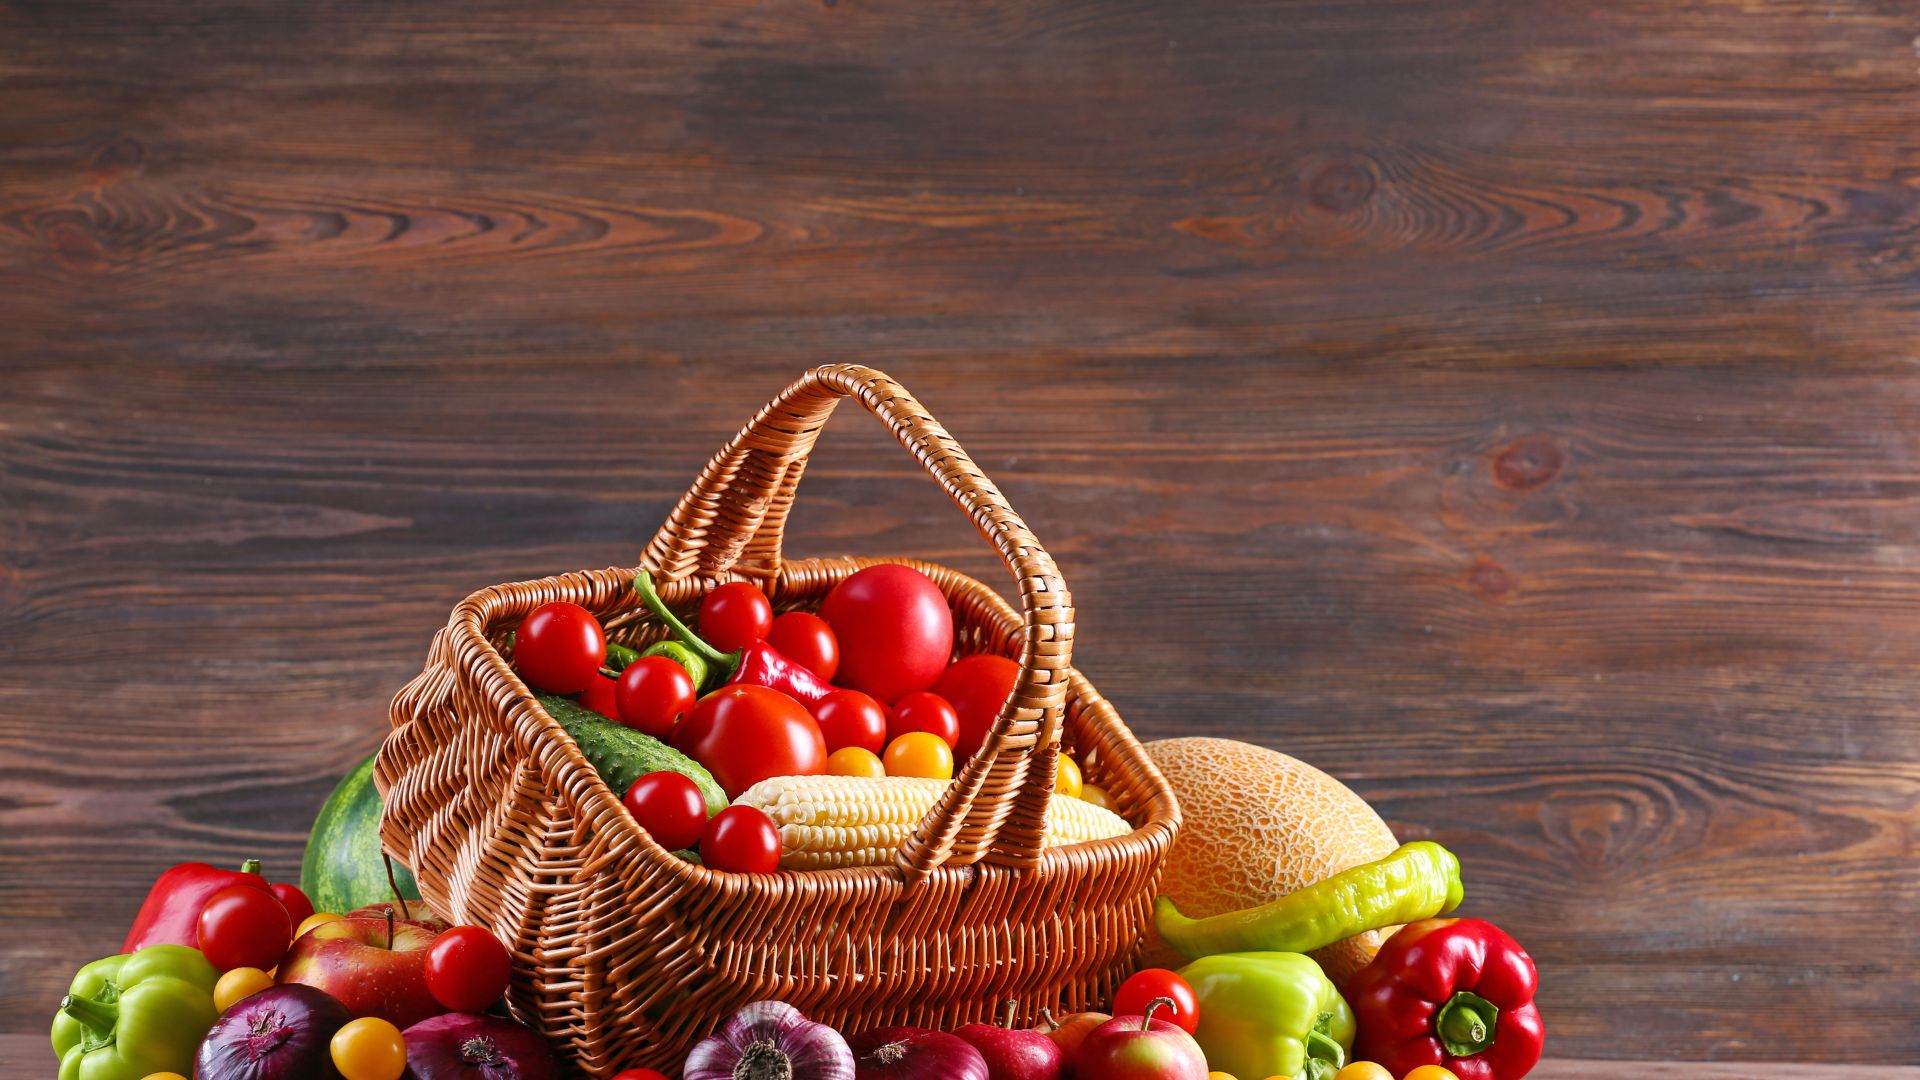 Shop Fresh Fruit and Vegetable Baskets Online at Les Paniers FruitMeUp